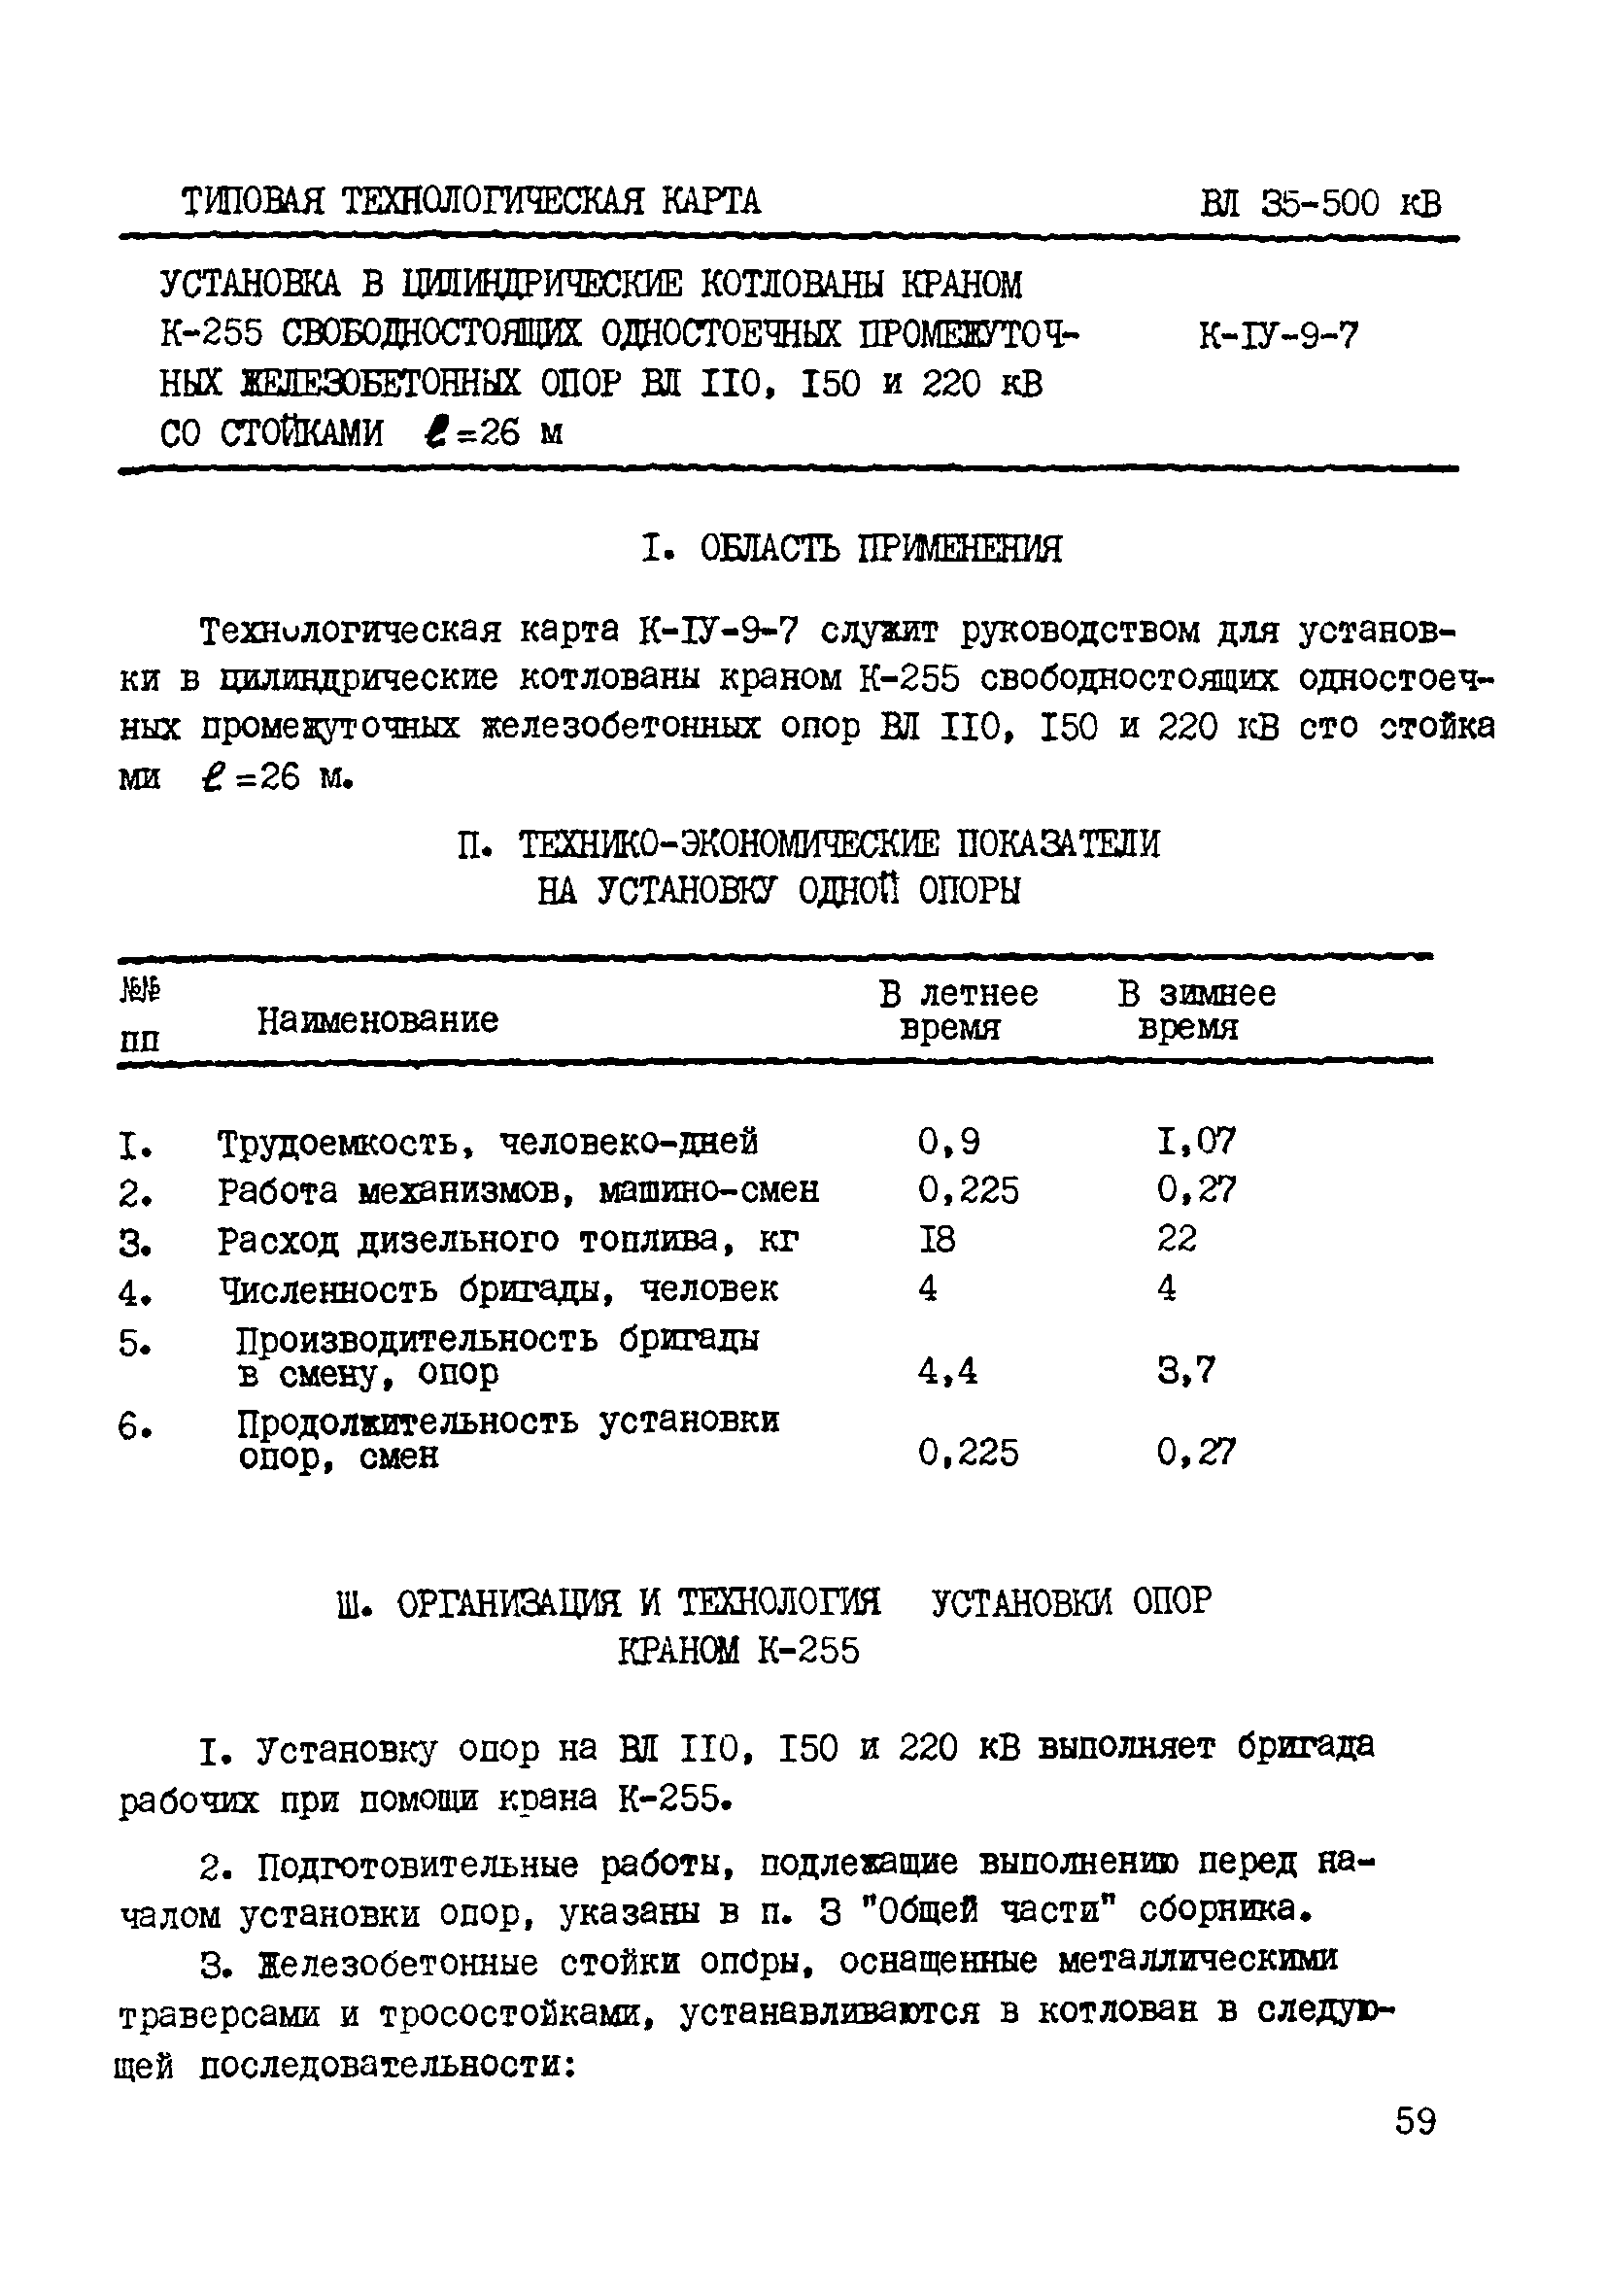 ТТК К-IV-9-7